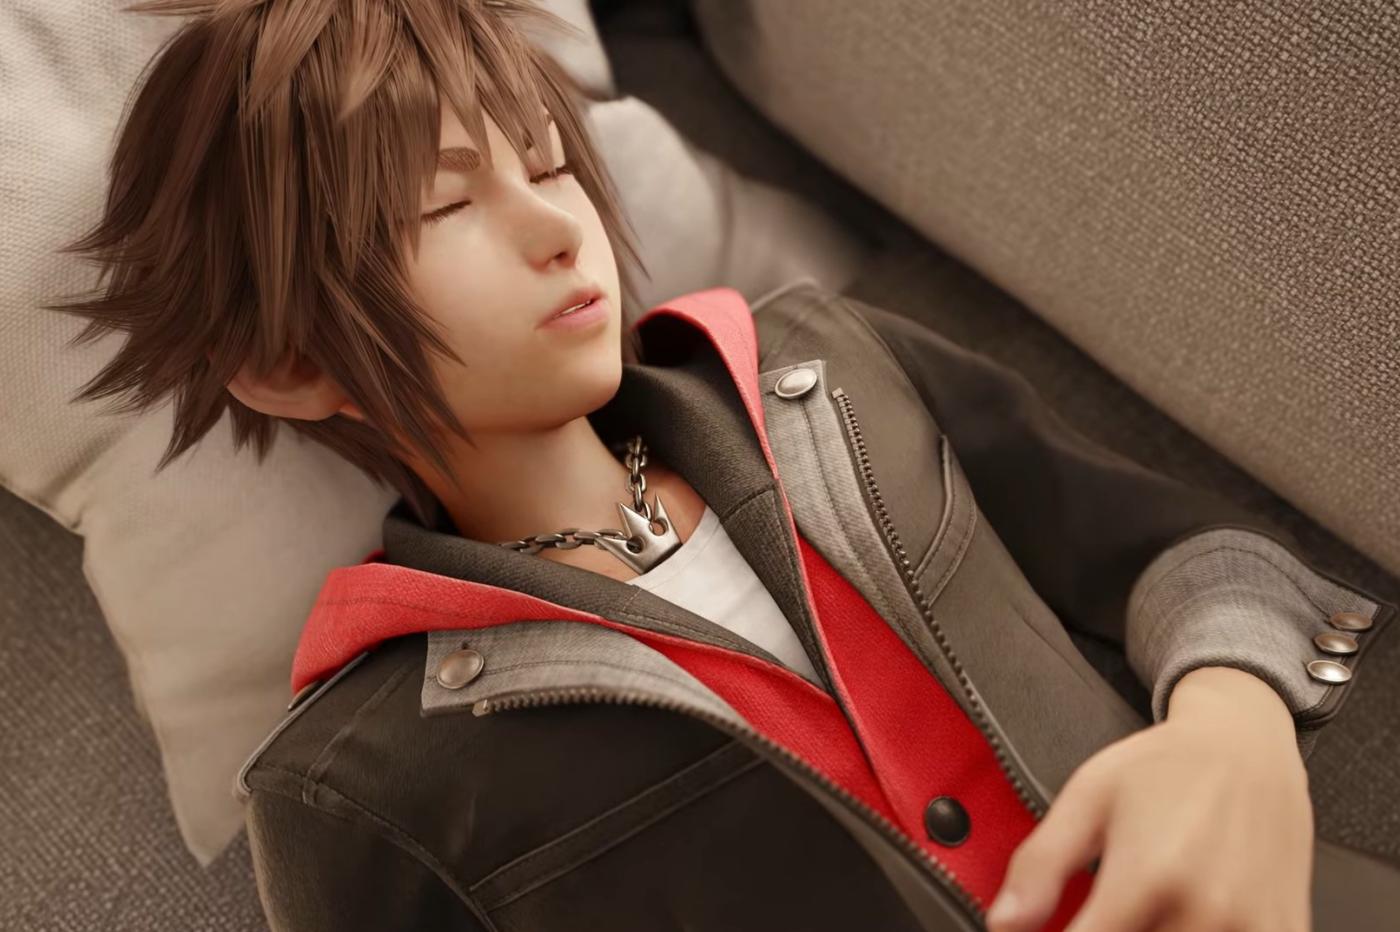 Sora from the Kingdom Hearts saga asleep on a sofa in the new Kingdom Hearts 4 trailer